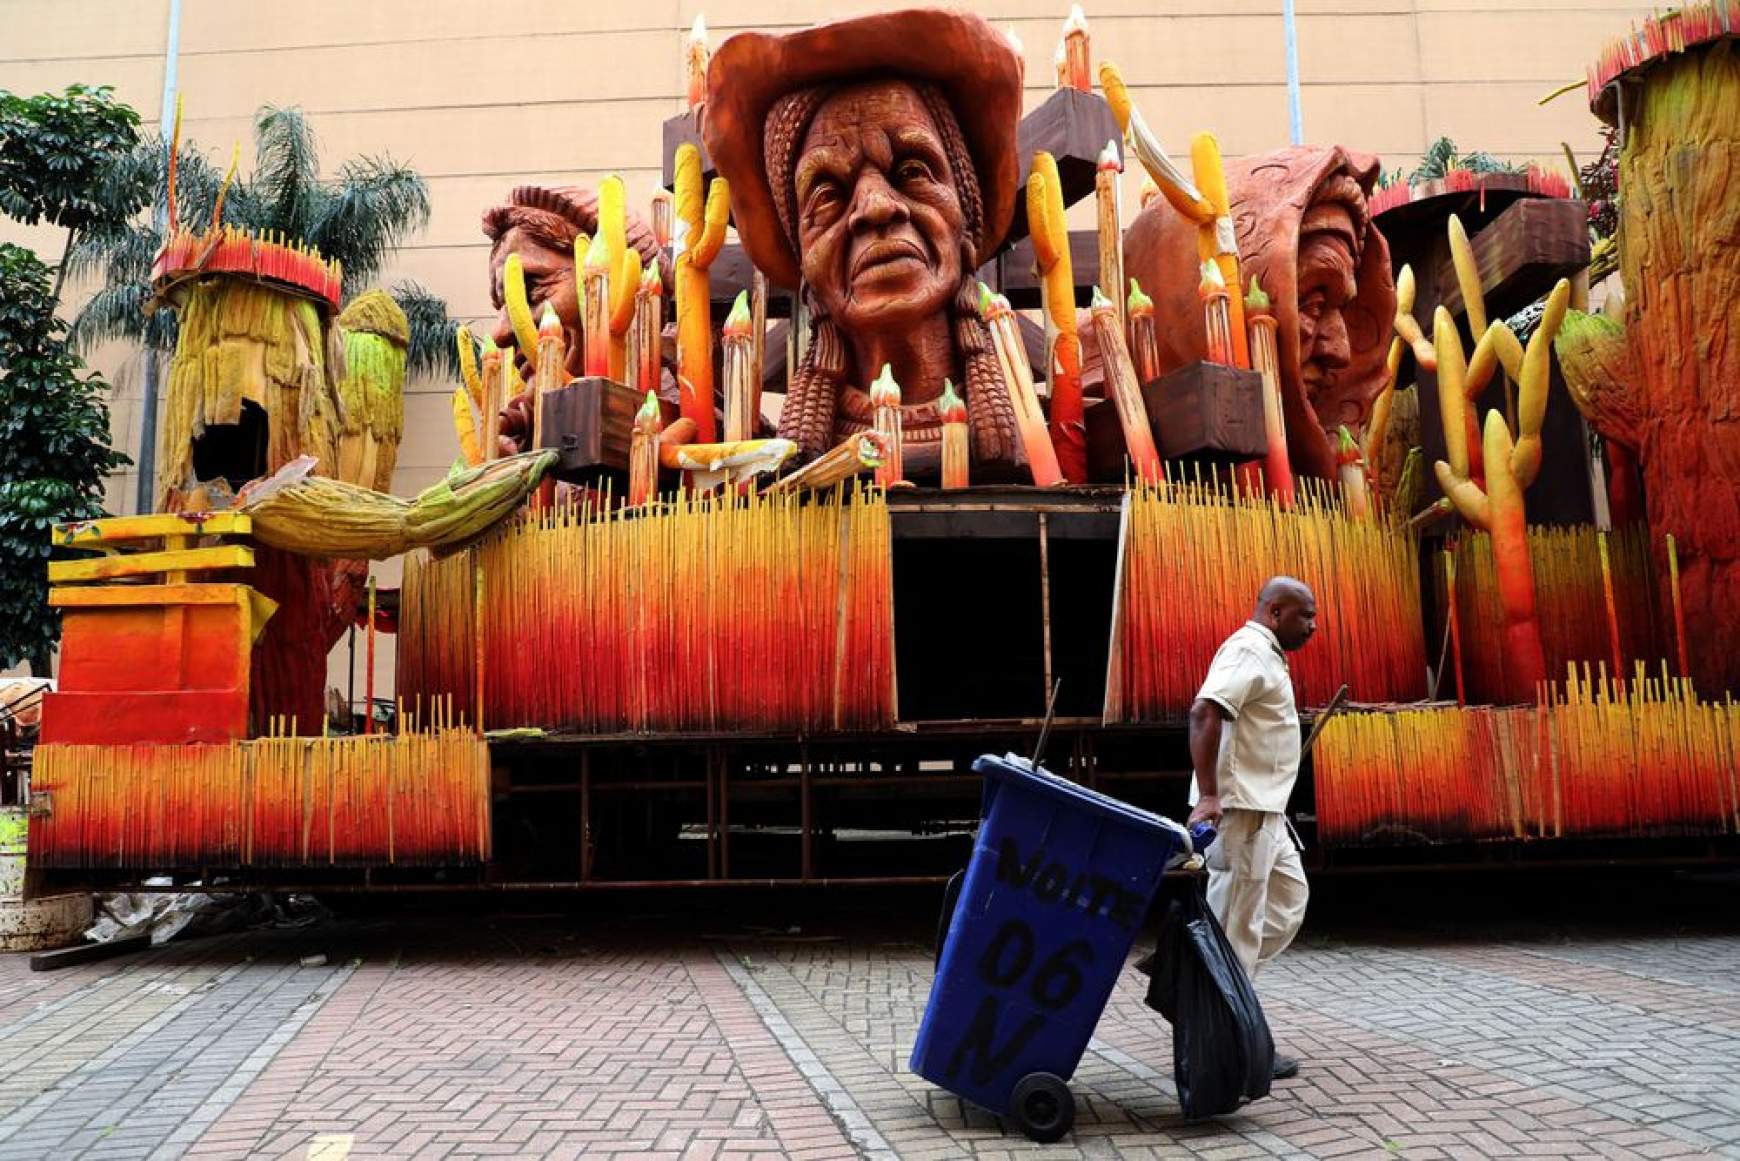 Utcai karneváli menet elmarad